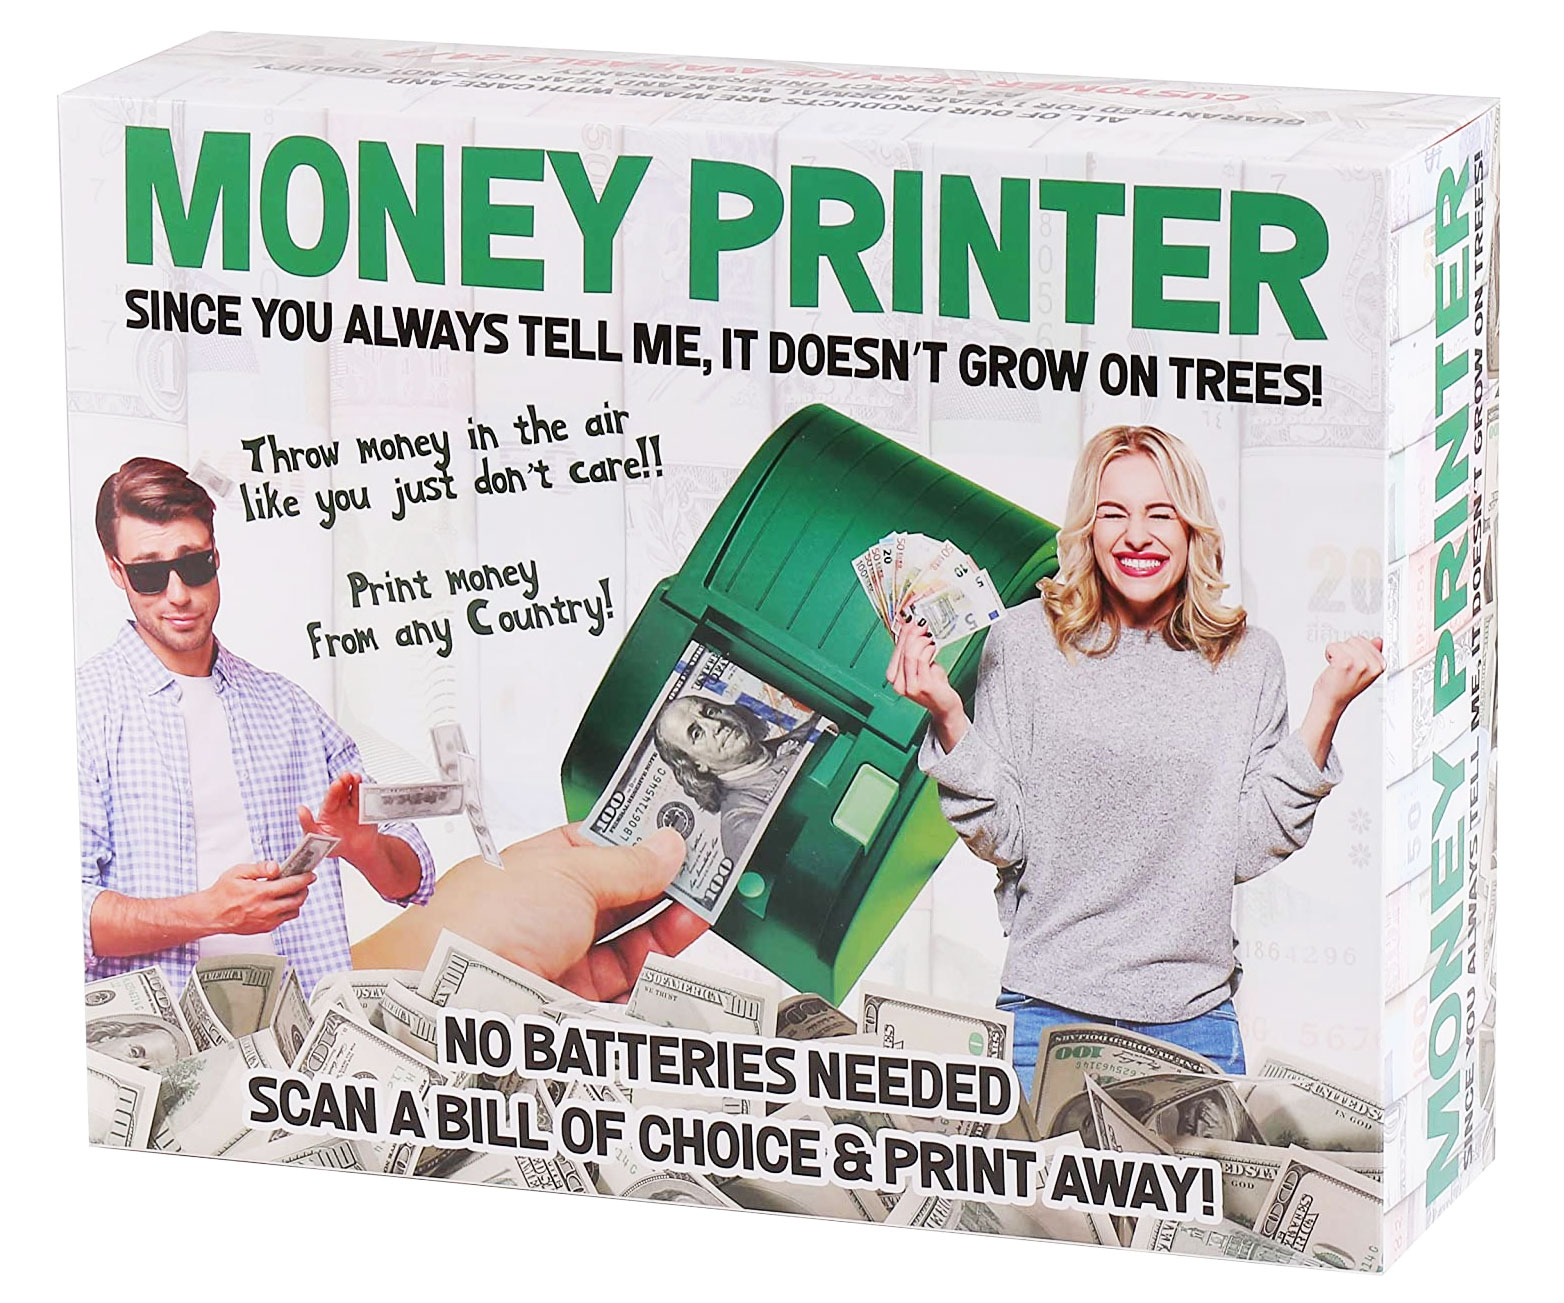 The Money Printer